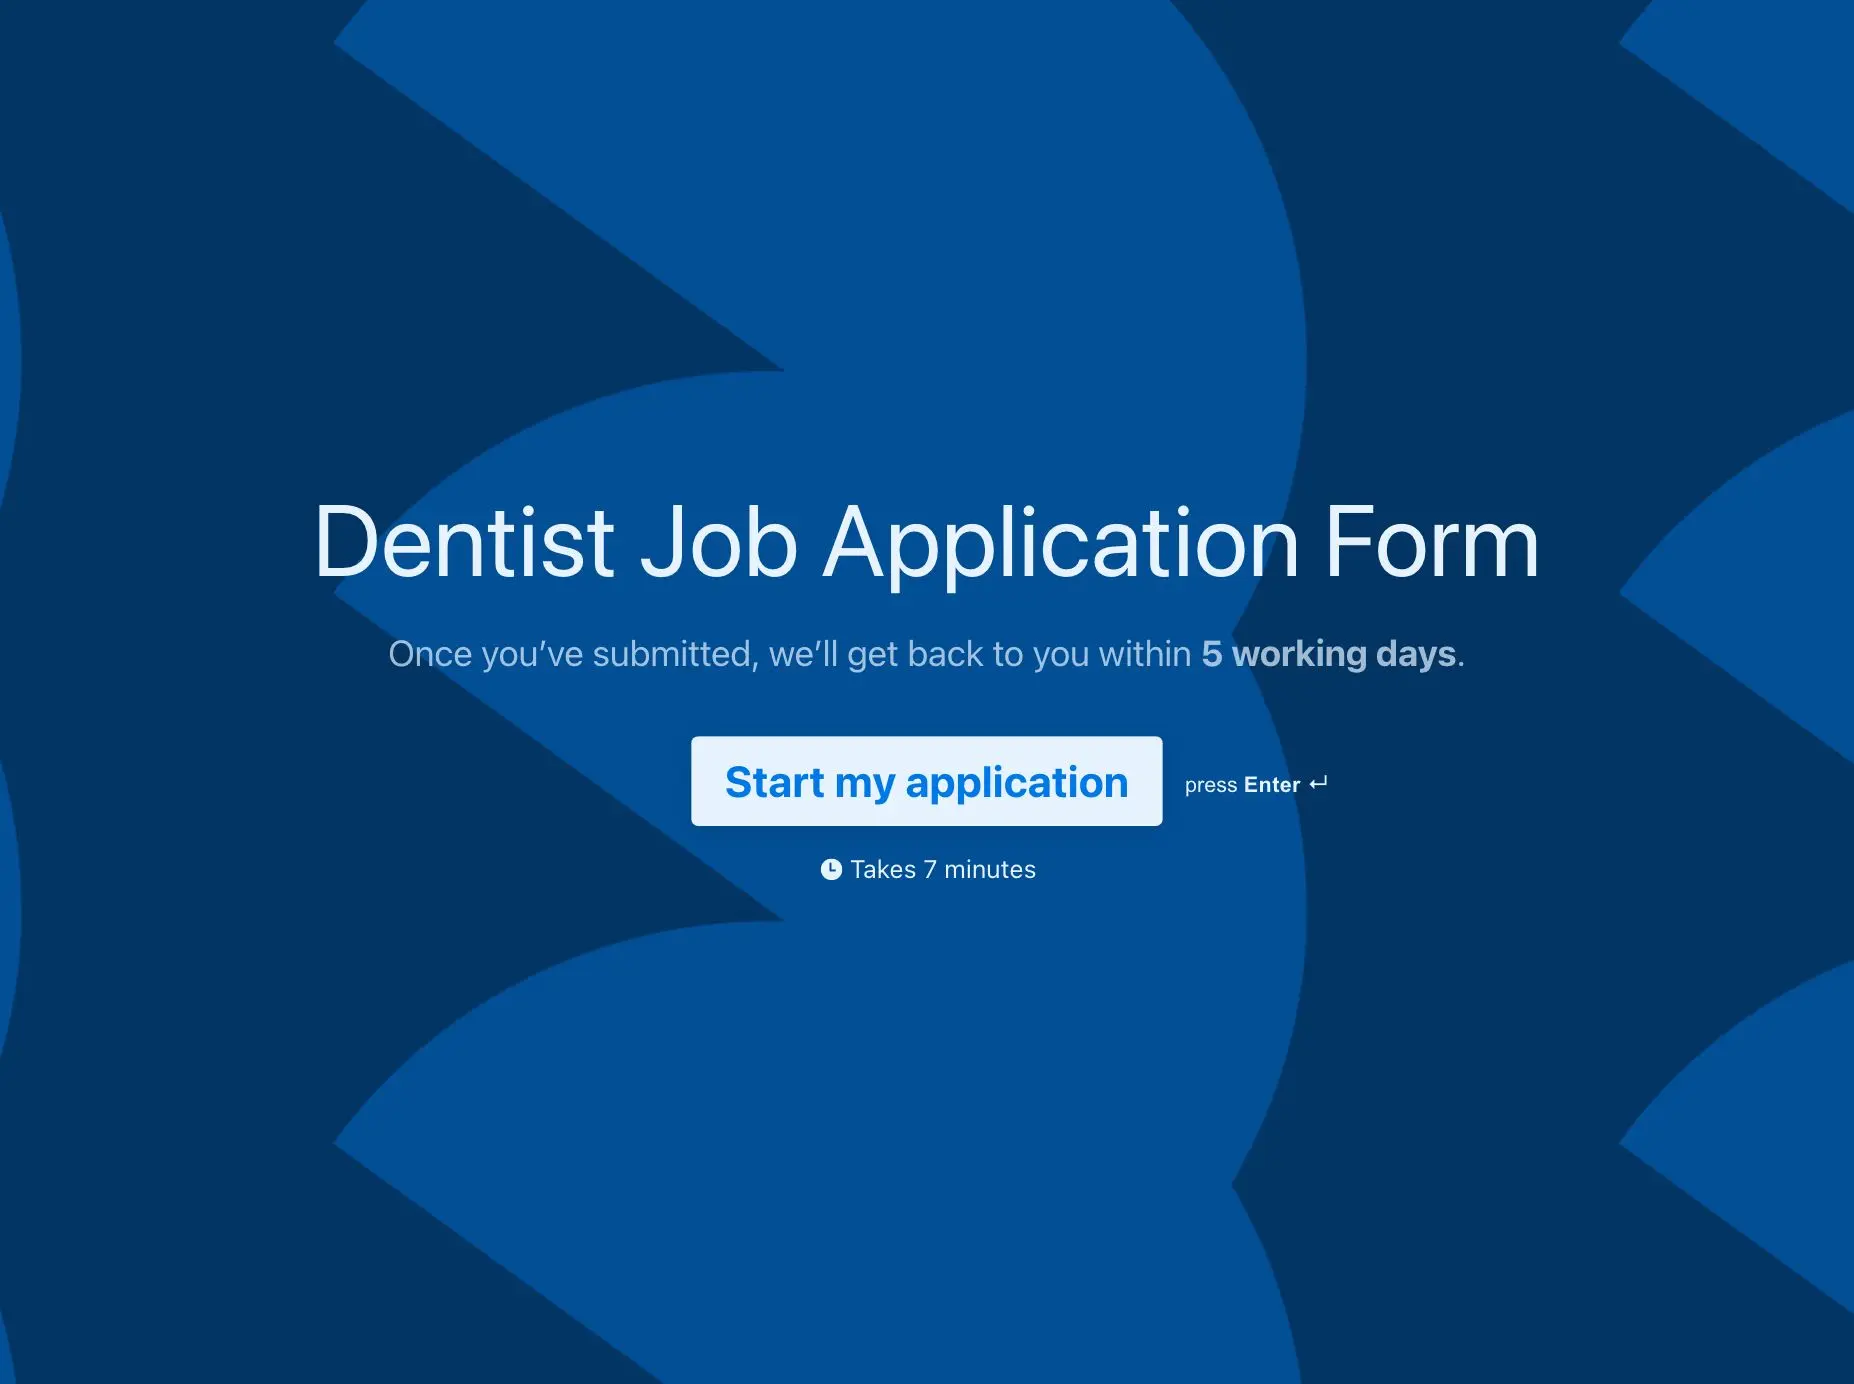 Dentist Job Application Form Template Hero